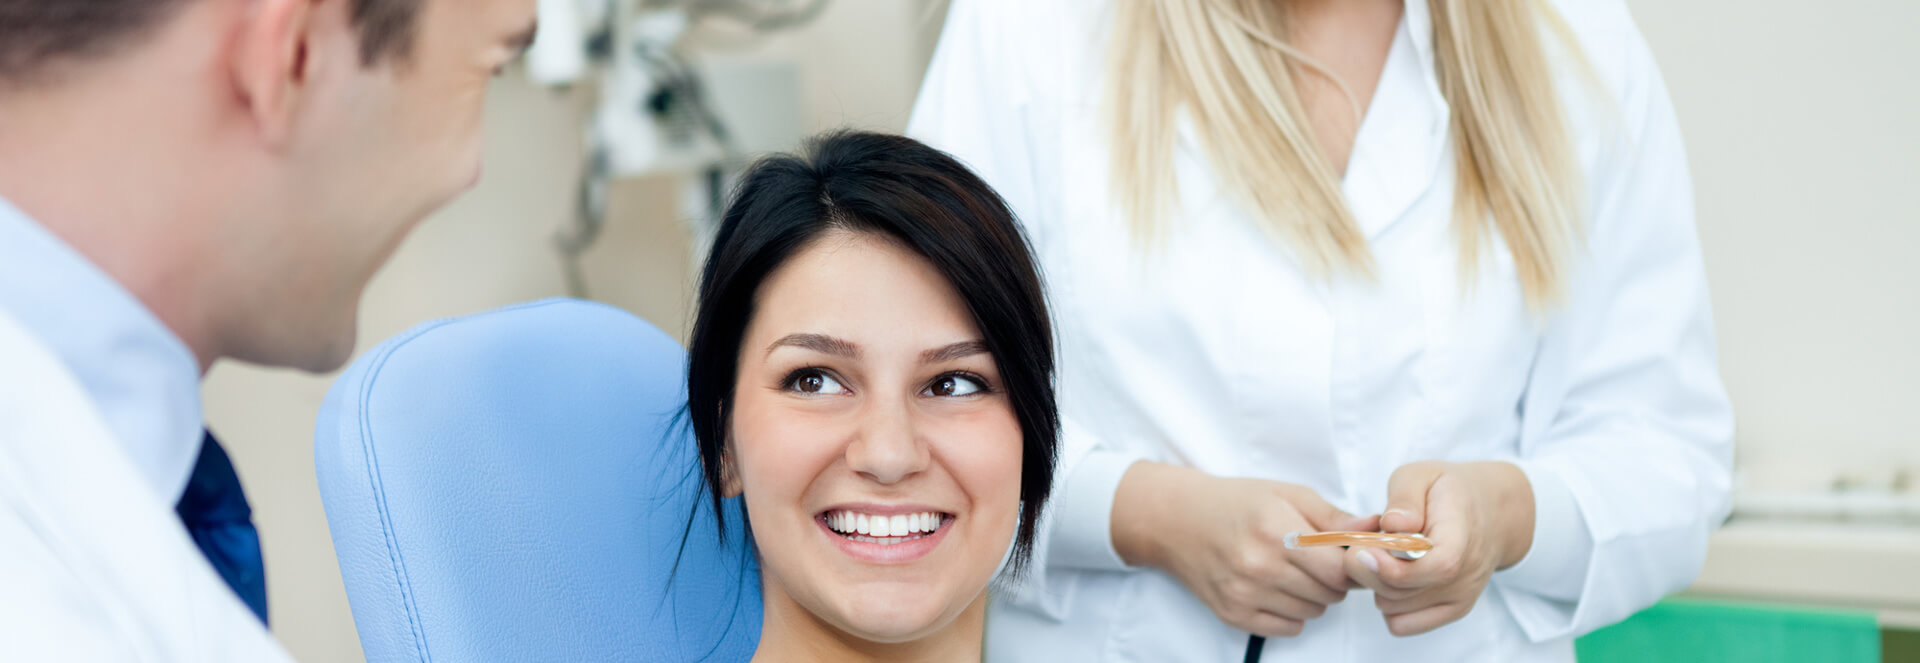 Smiling female patient receiving dental treatment